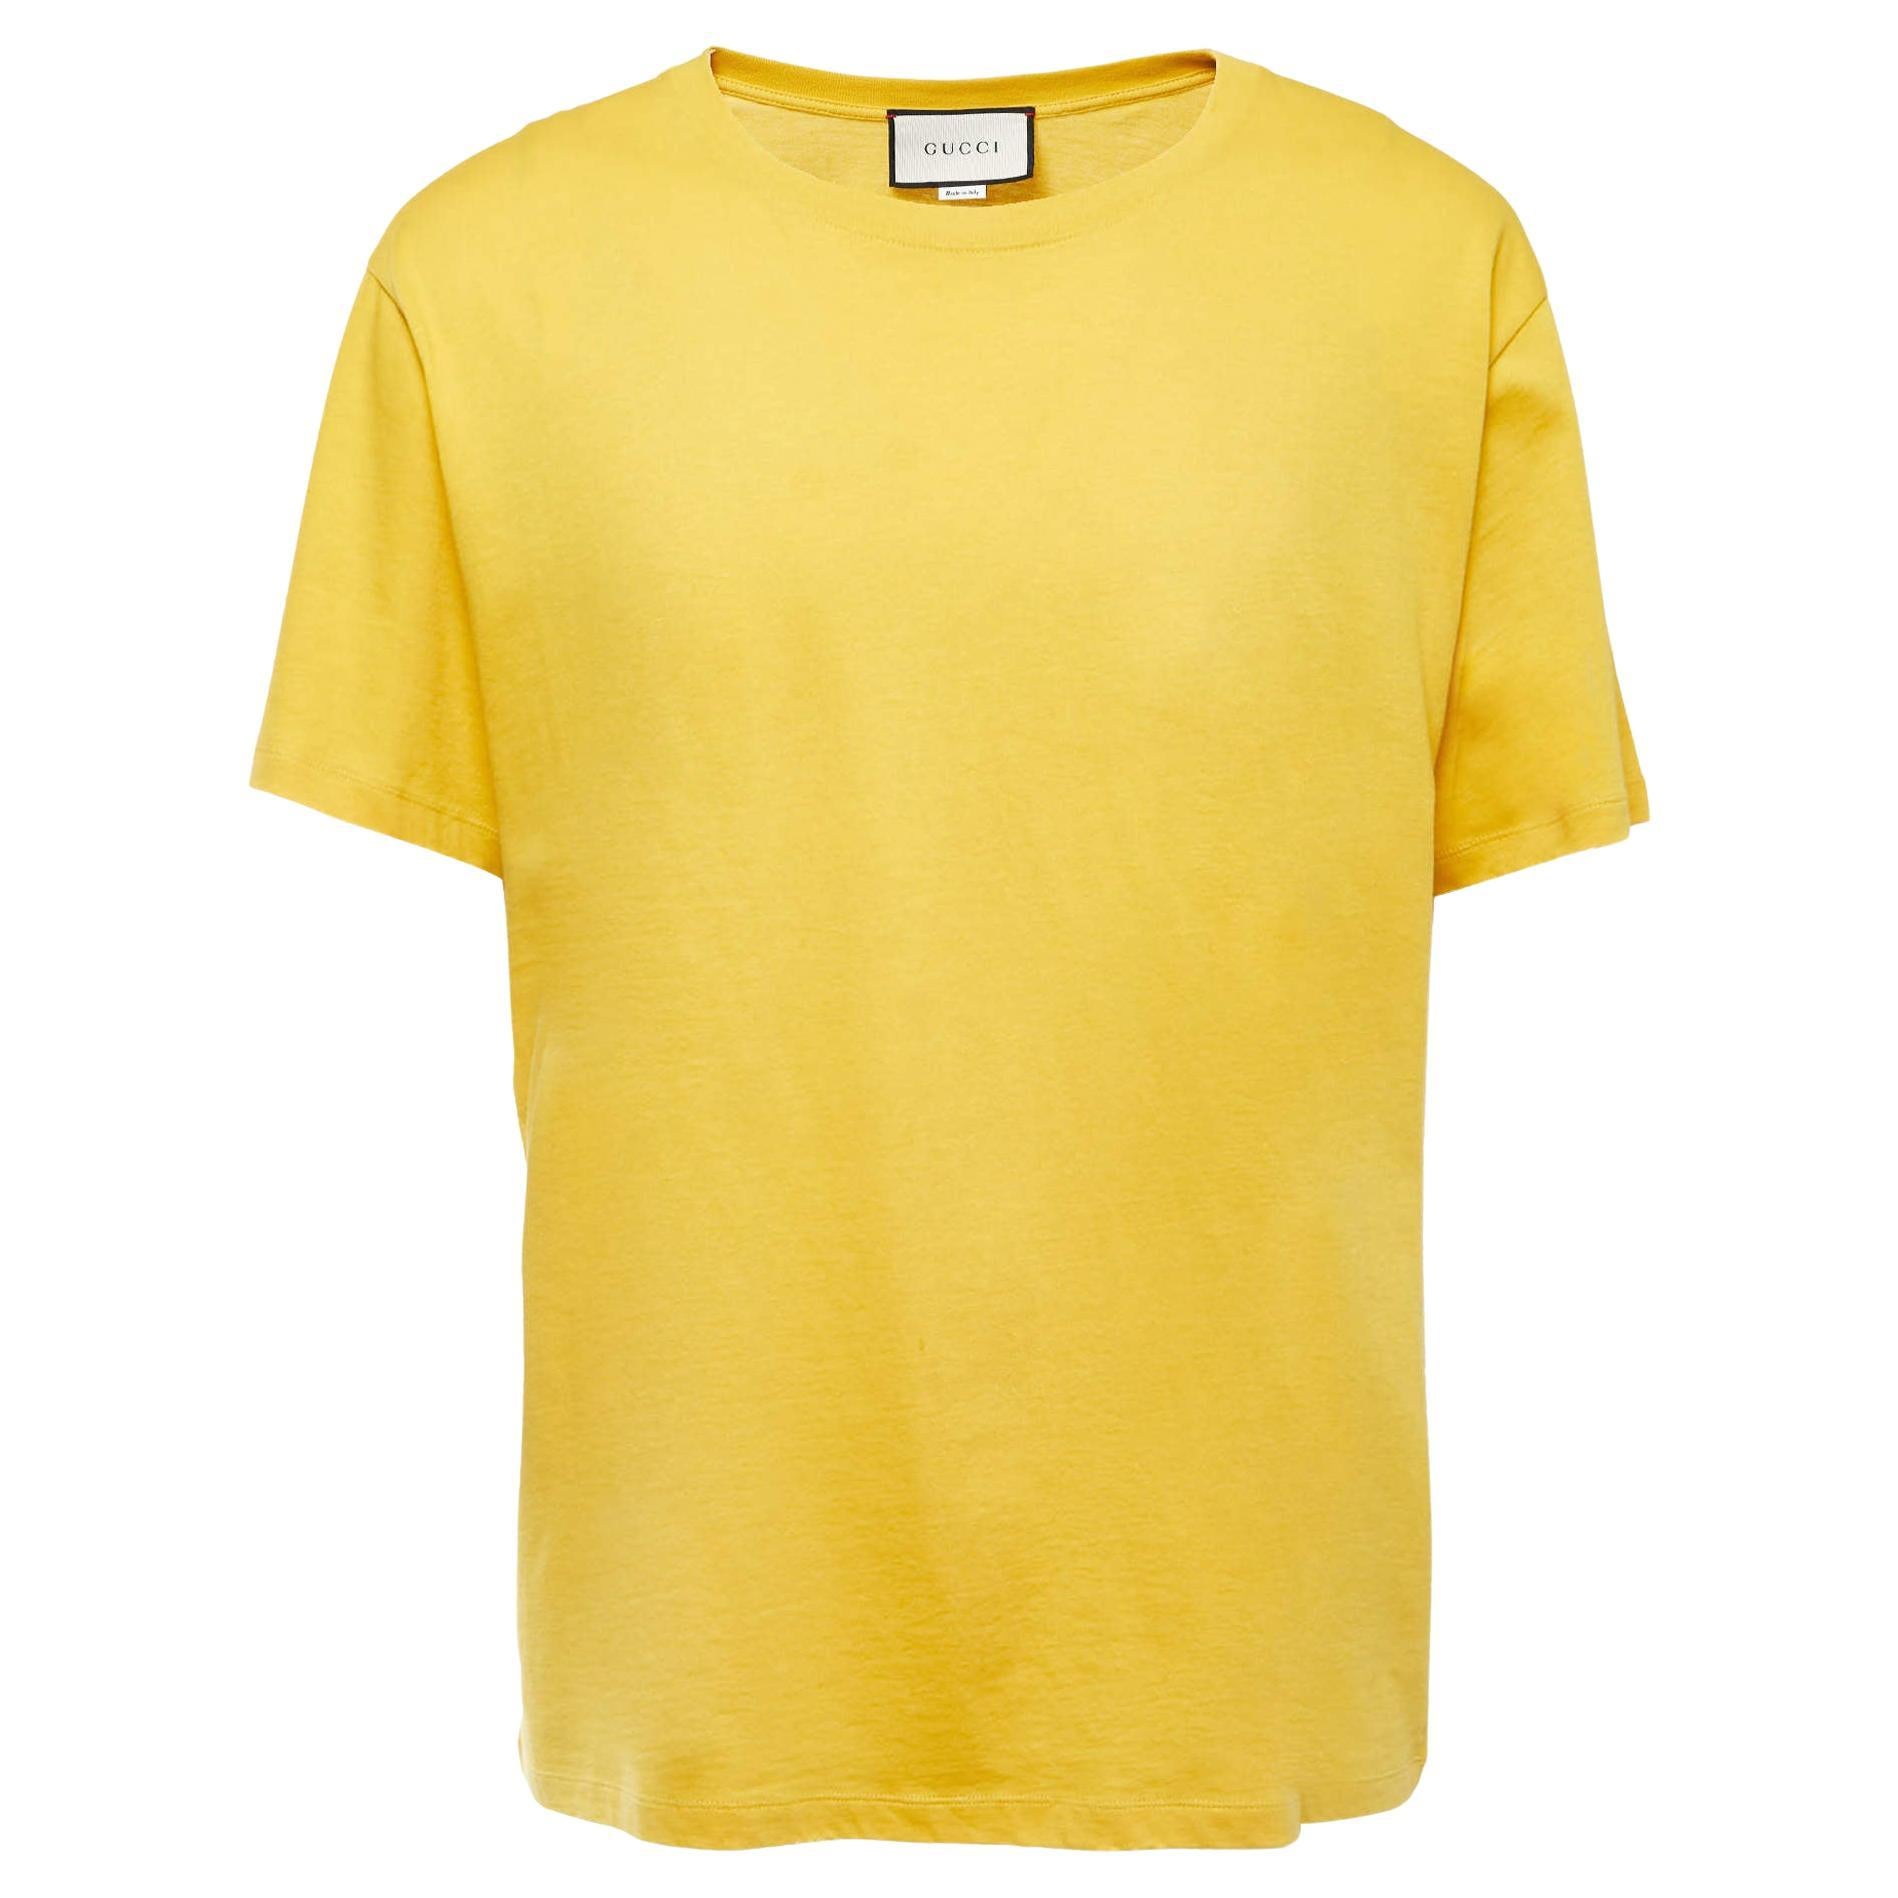 Gucci Yellow Distressed Cotton T-Shirt XL